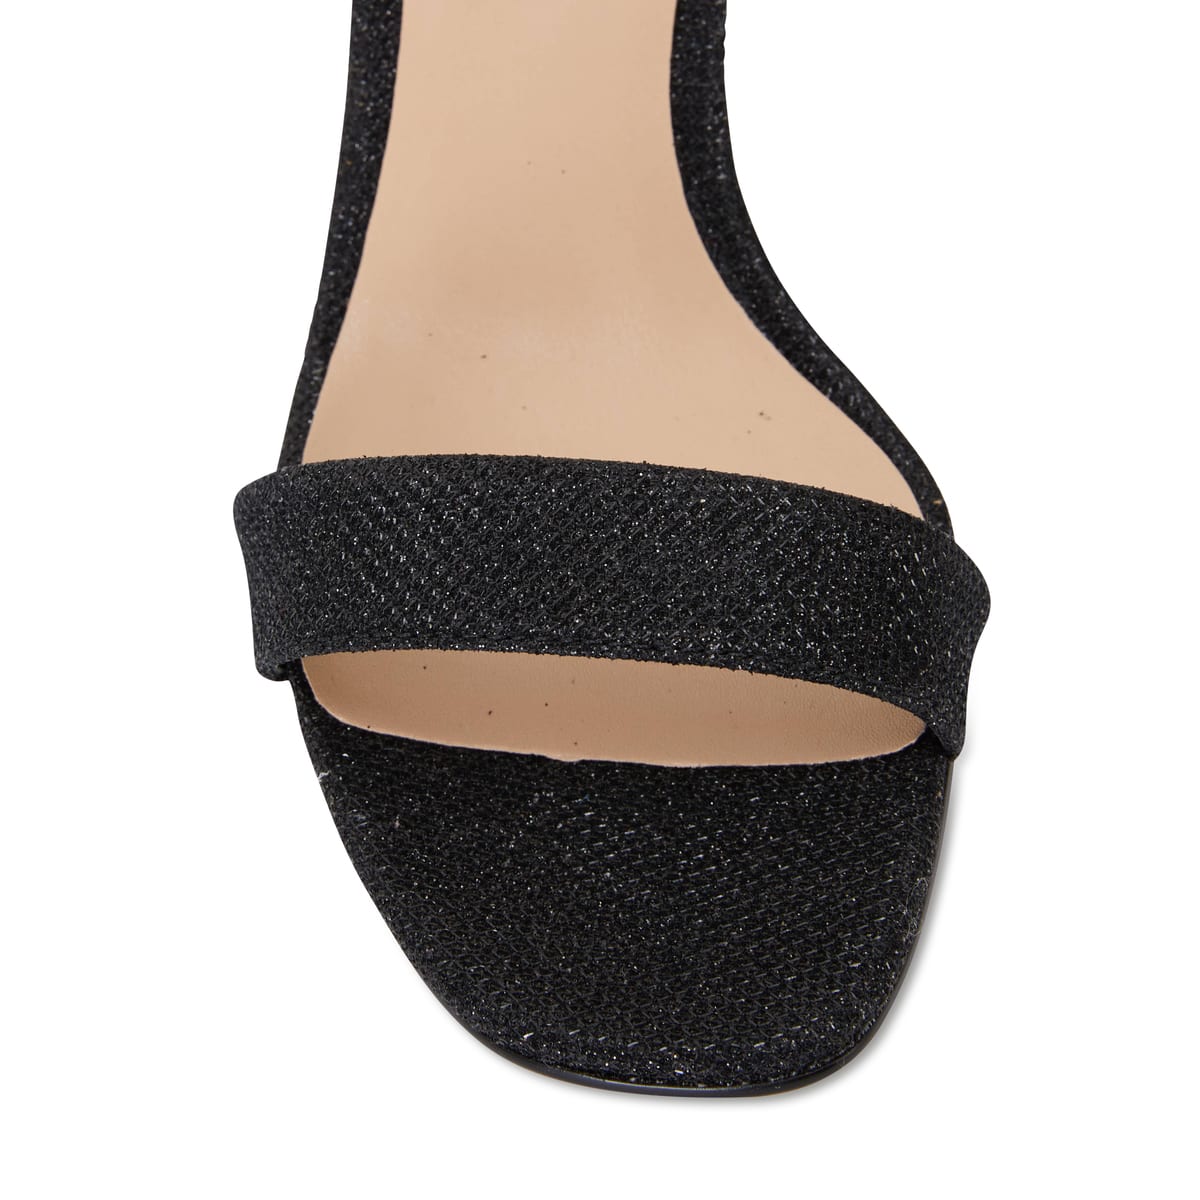 Unison Heel in Black Shimmer Fabric